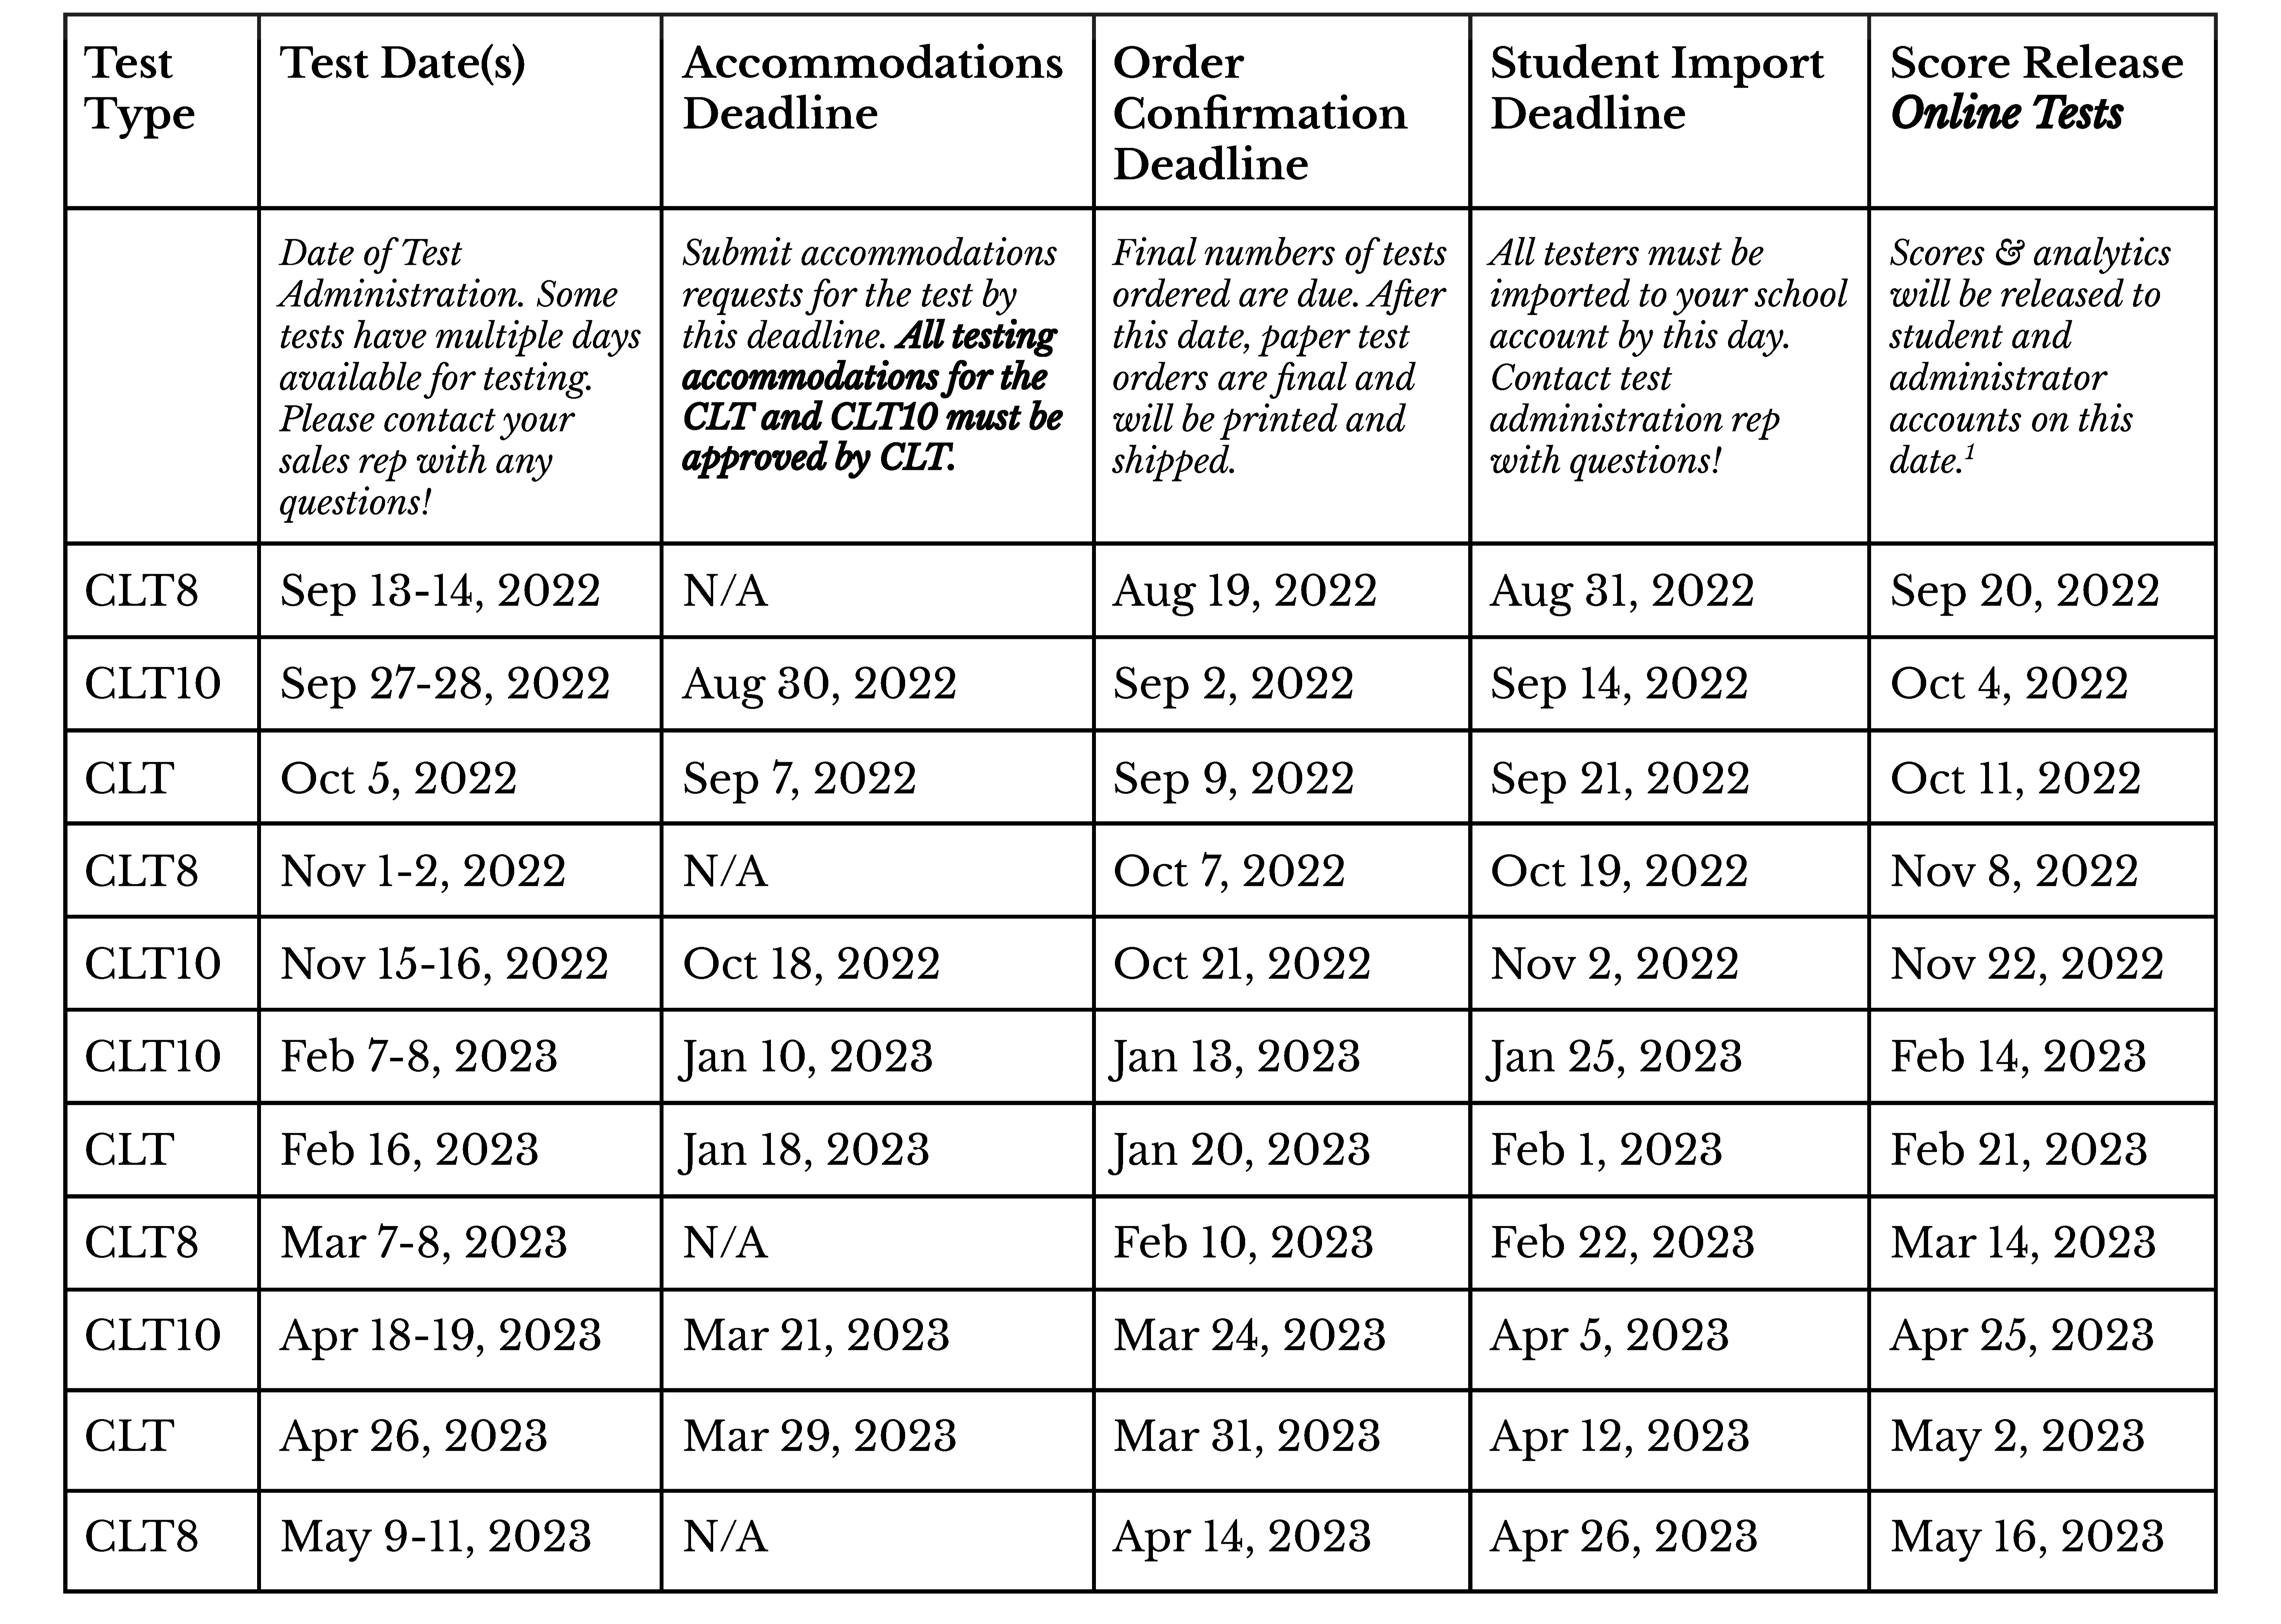 2022-2023 CLT In-School Test Deadlines (1)_Page_1-1-2